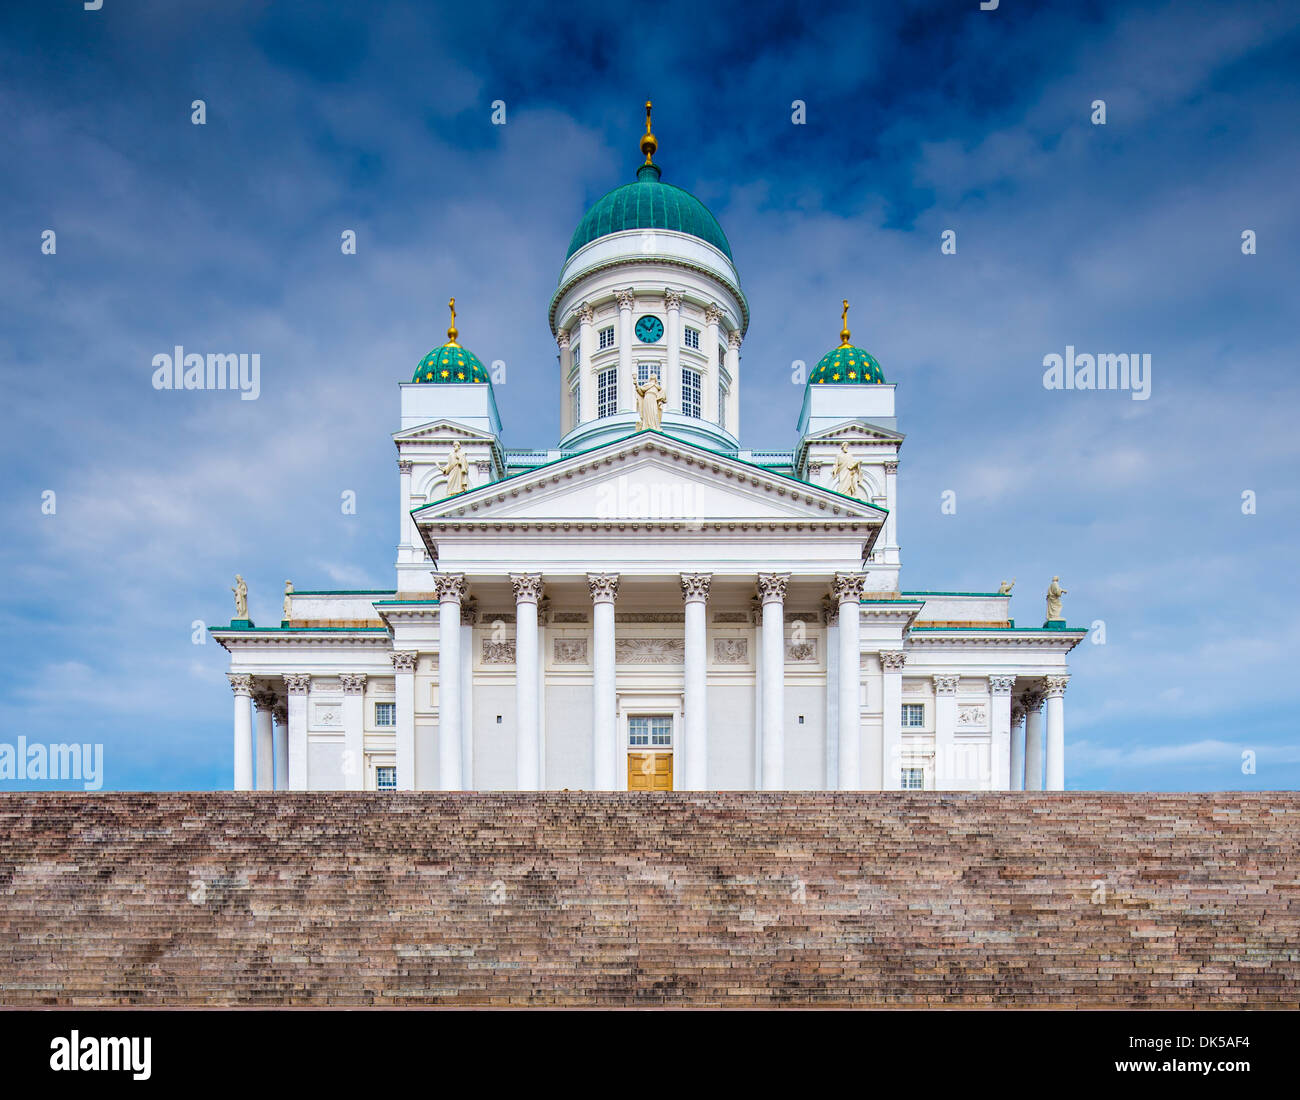 Dom von Helsinki in Helsinki, Finnland. Stockfoto